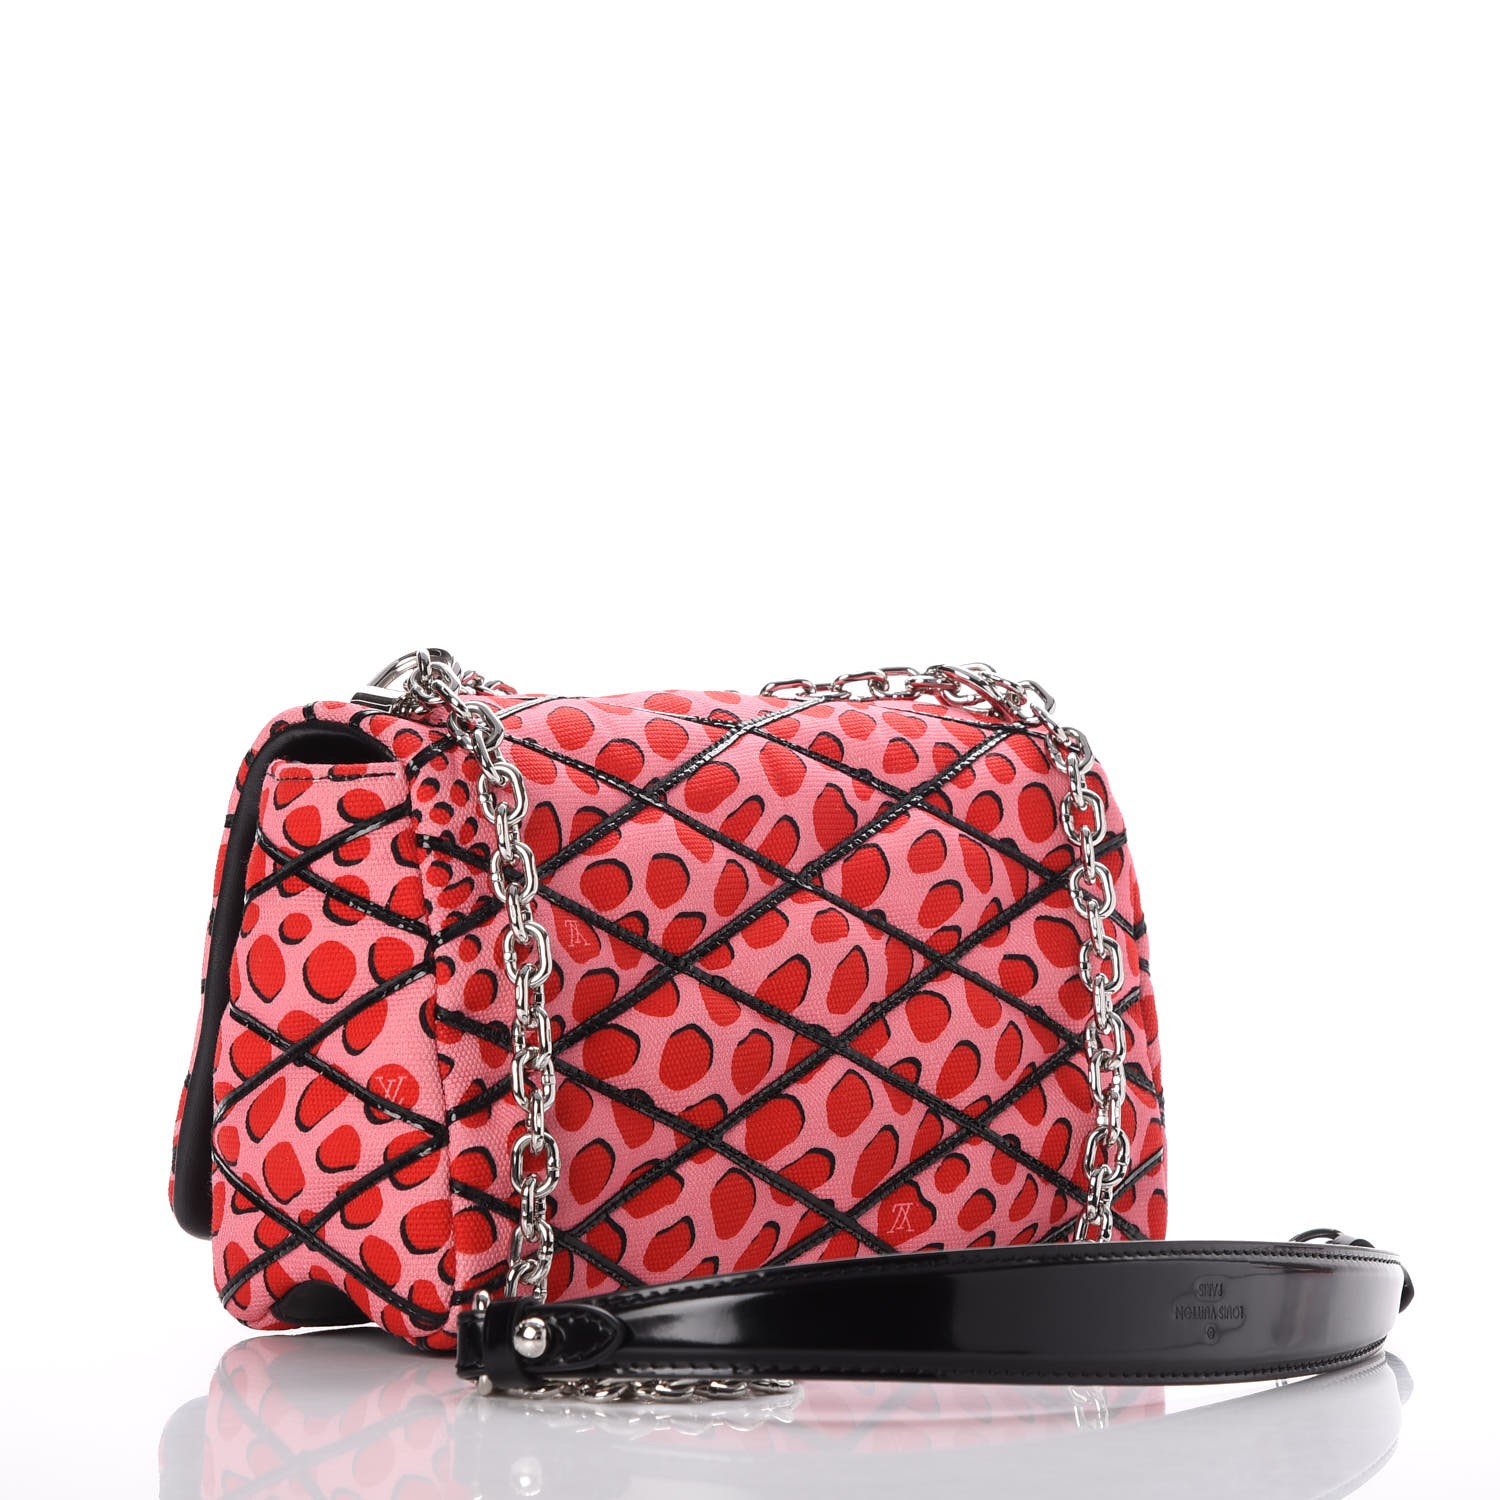 Zoomoni Premium Bag Organizer for LV Louis Vuitton Petite Malle